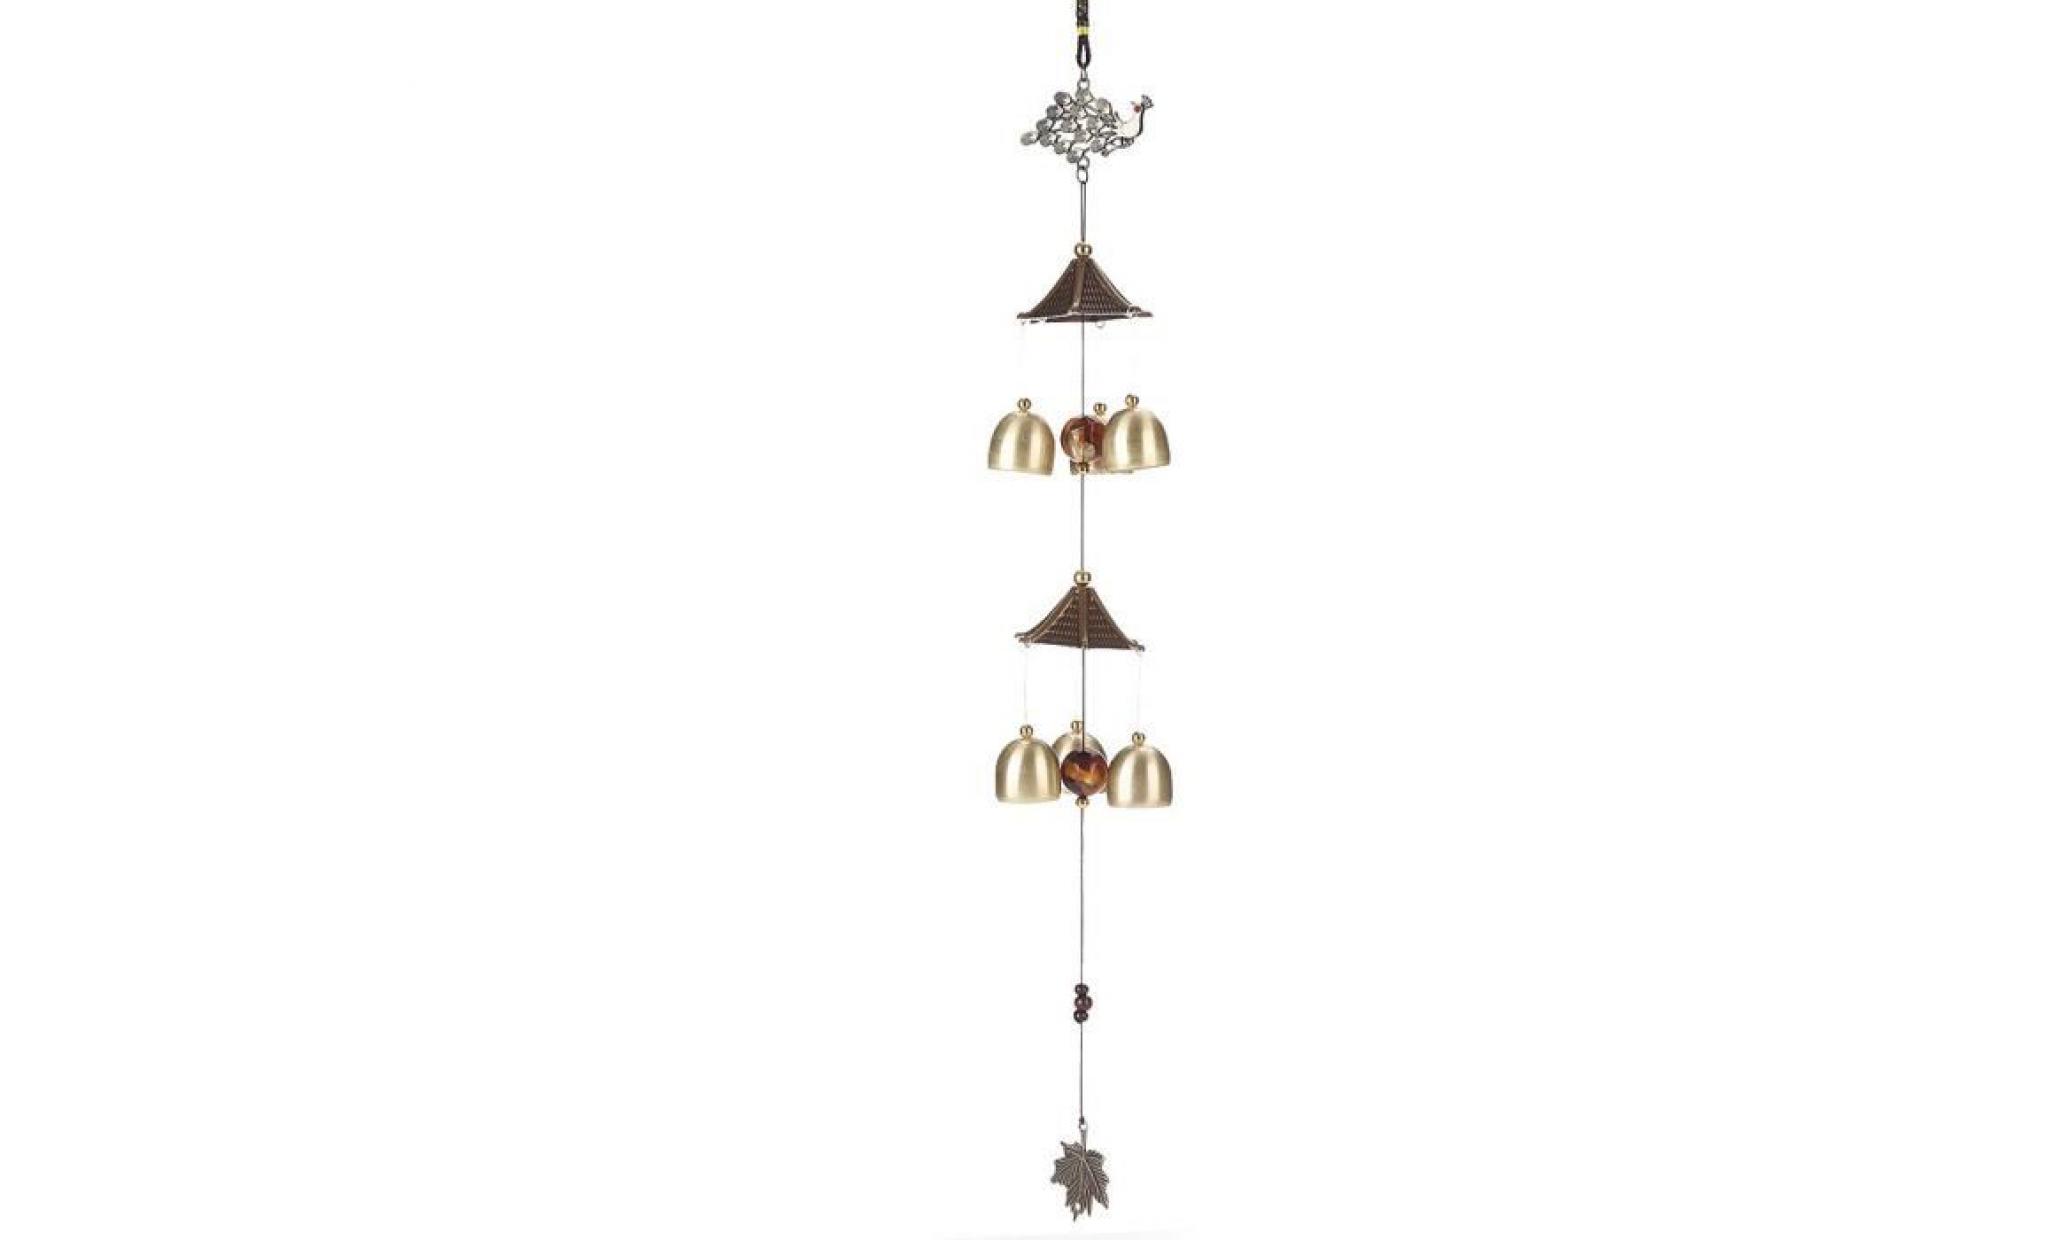 amazing carillon grace collection grand son couleur bronze cloches vent carillons   cff70326401a